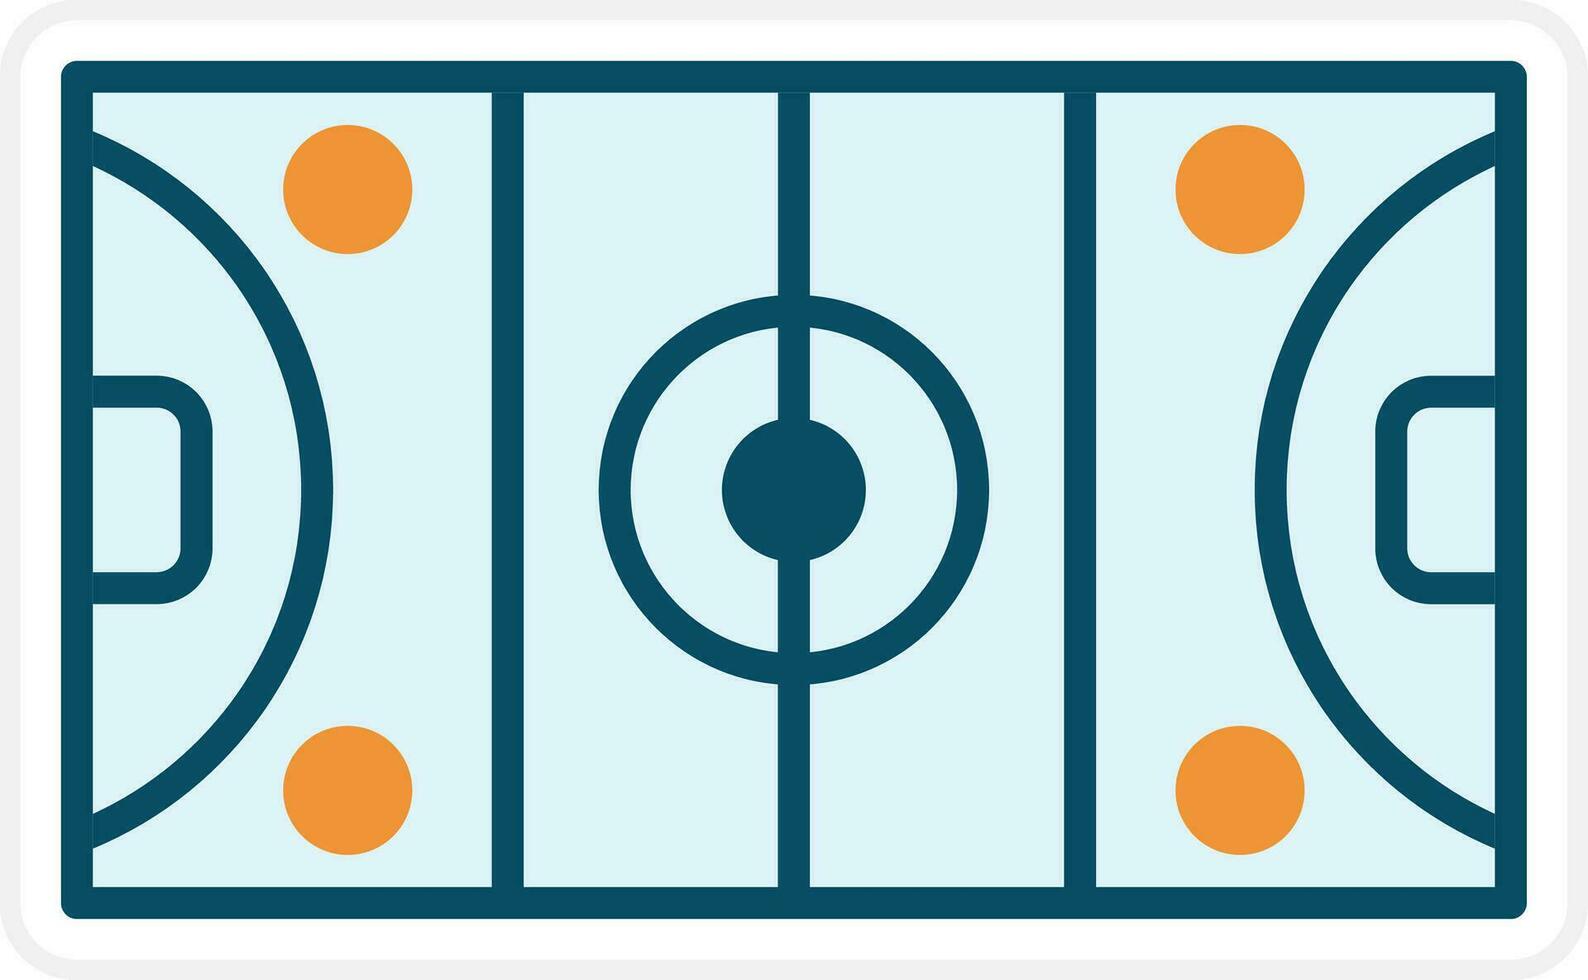 hockey campo vector icono